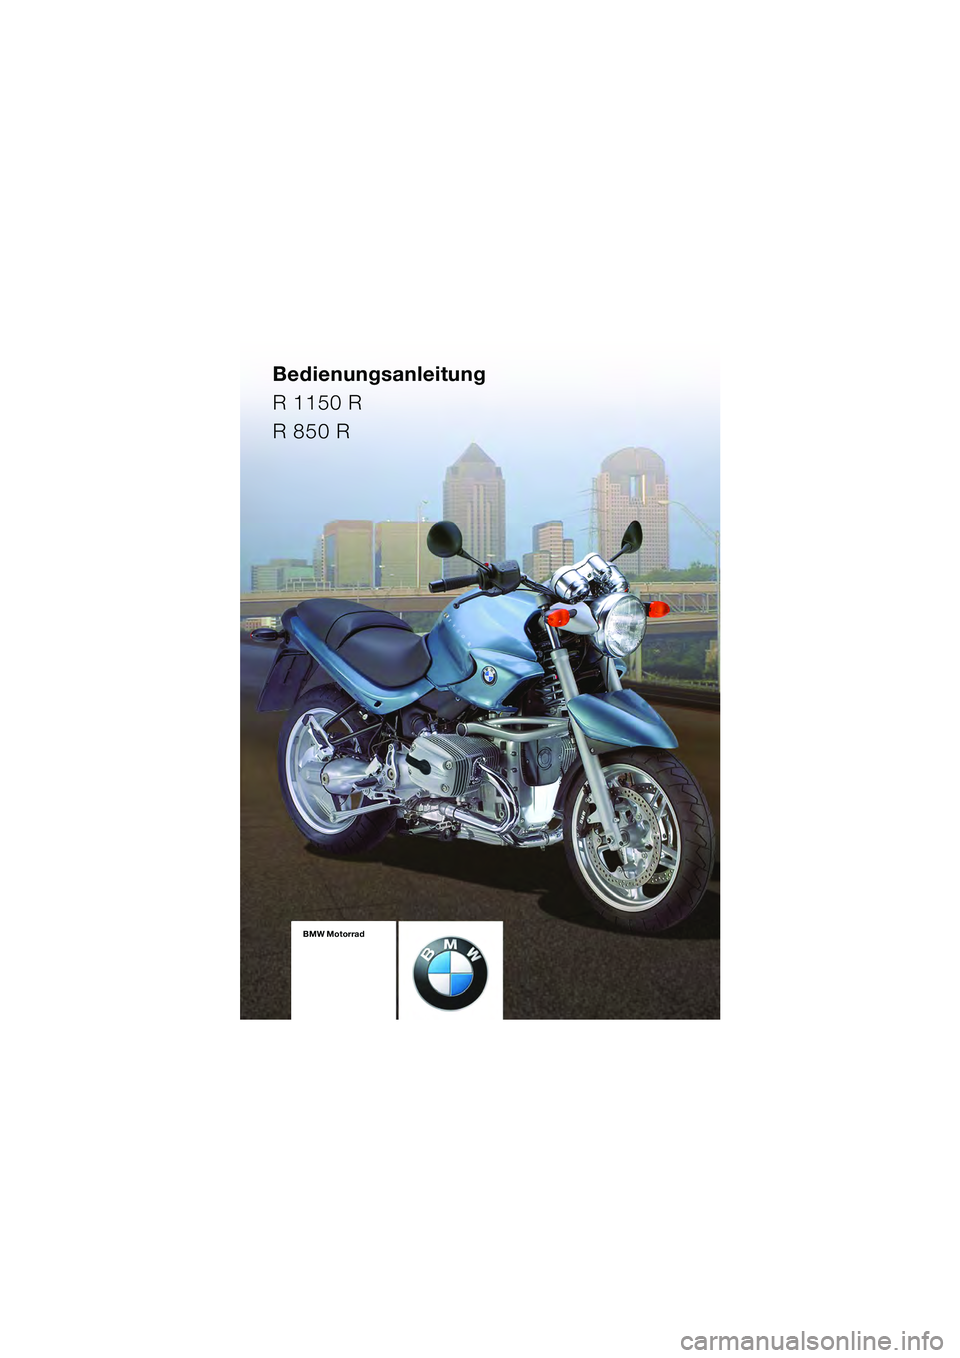 BMW MOTORRAD R 850 R 2004  Betriebsanleitung (in German) Bedienungsanleitung
R 1150 R
R 850 R
BMW Motorrad
10r28cod3.fm  Seite 89 Dienstag, 25. Mai 2004  4:47 16 